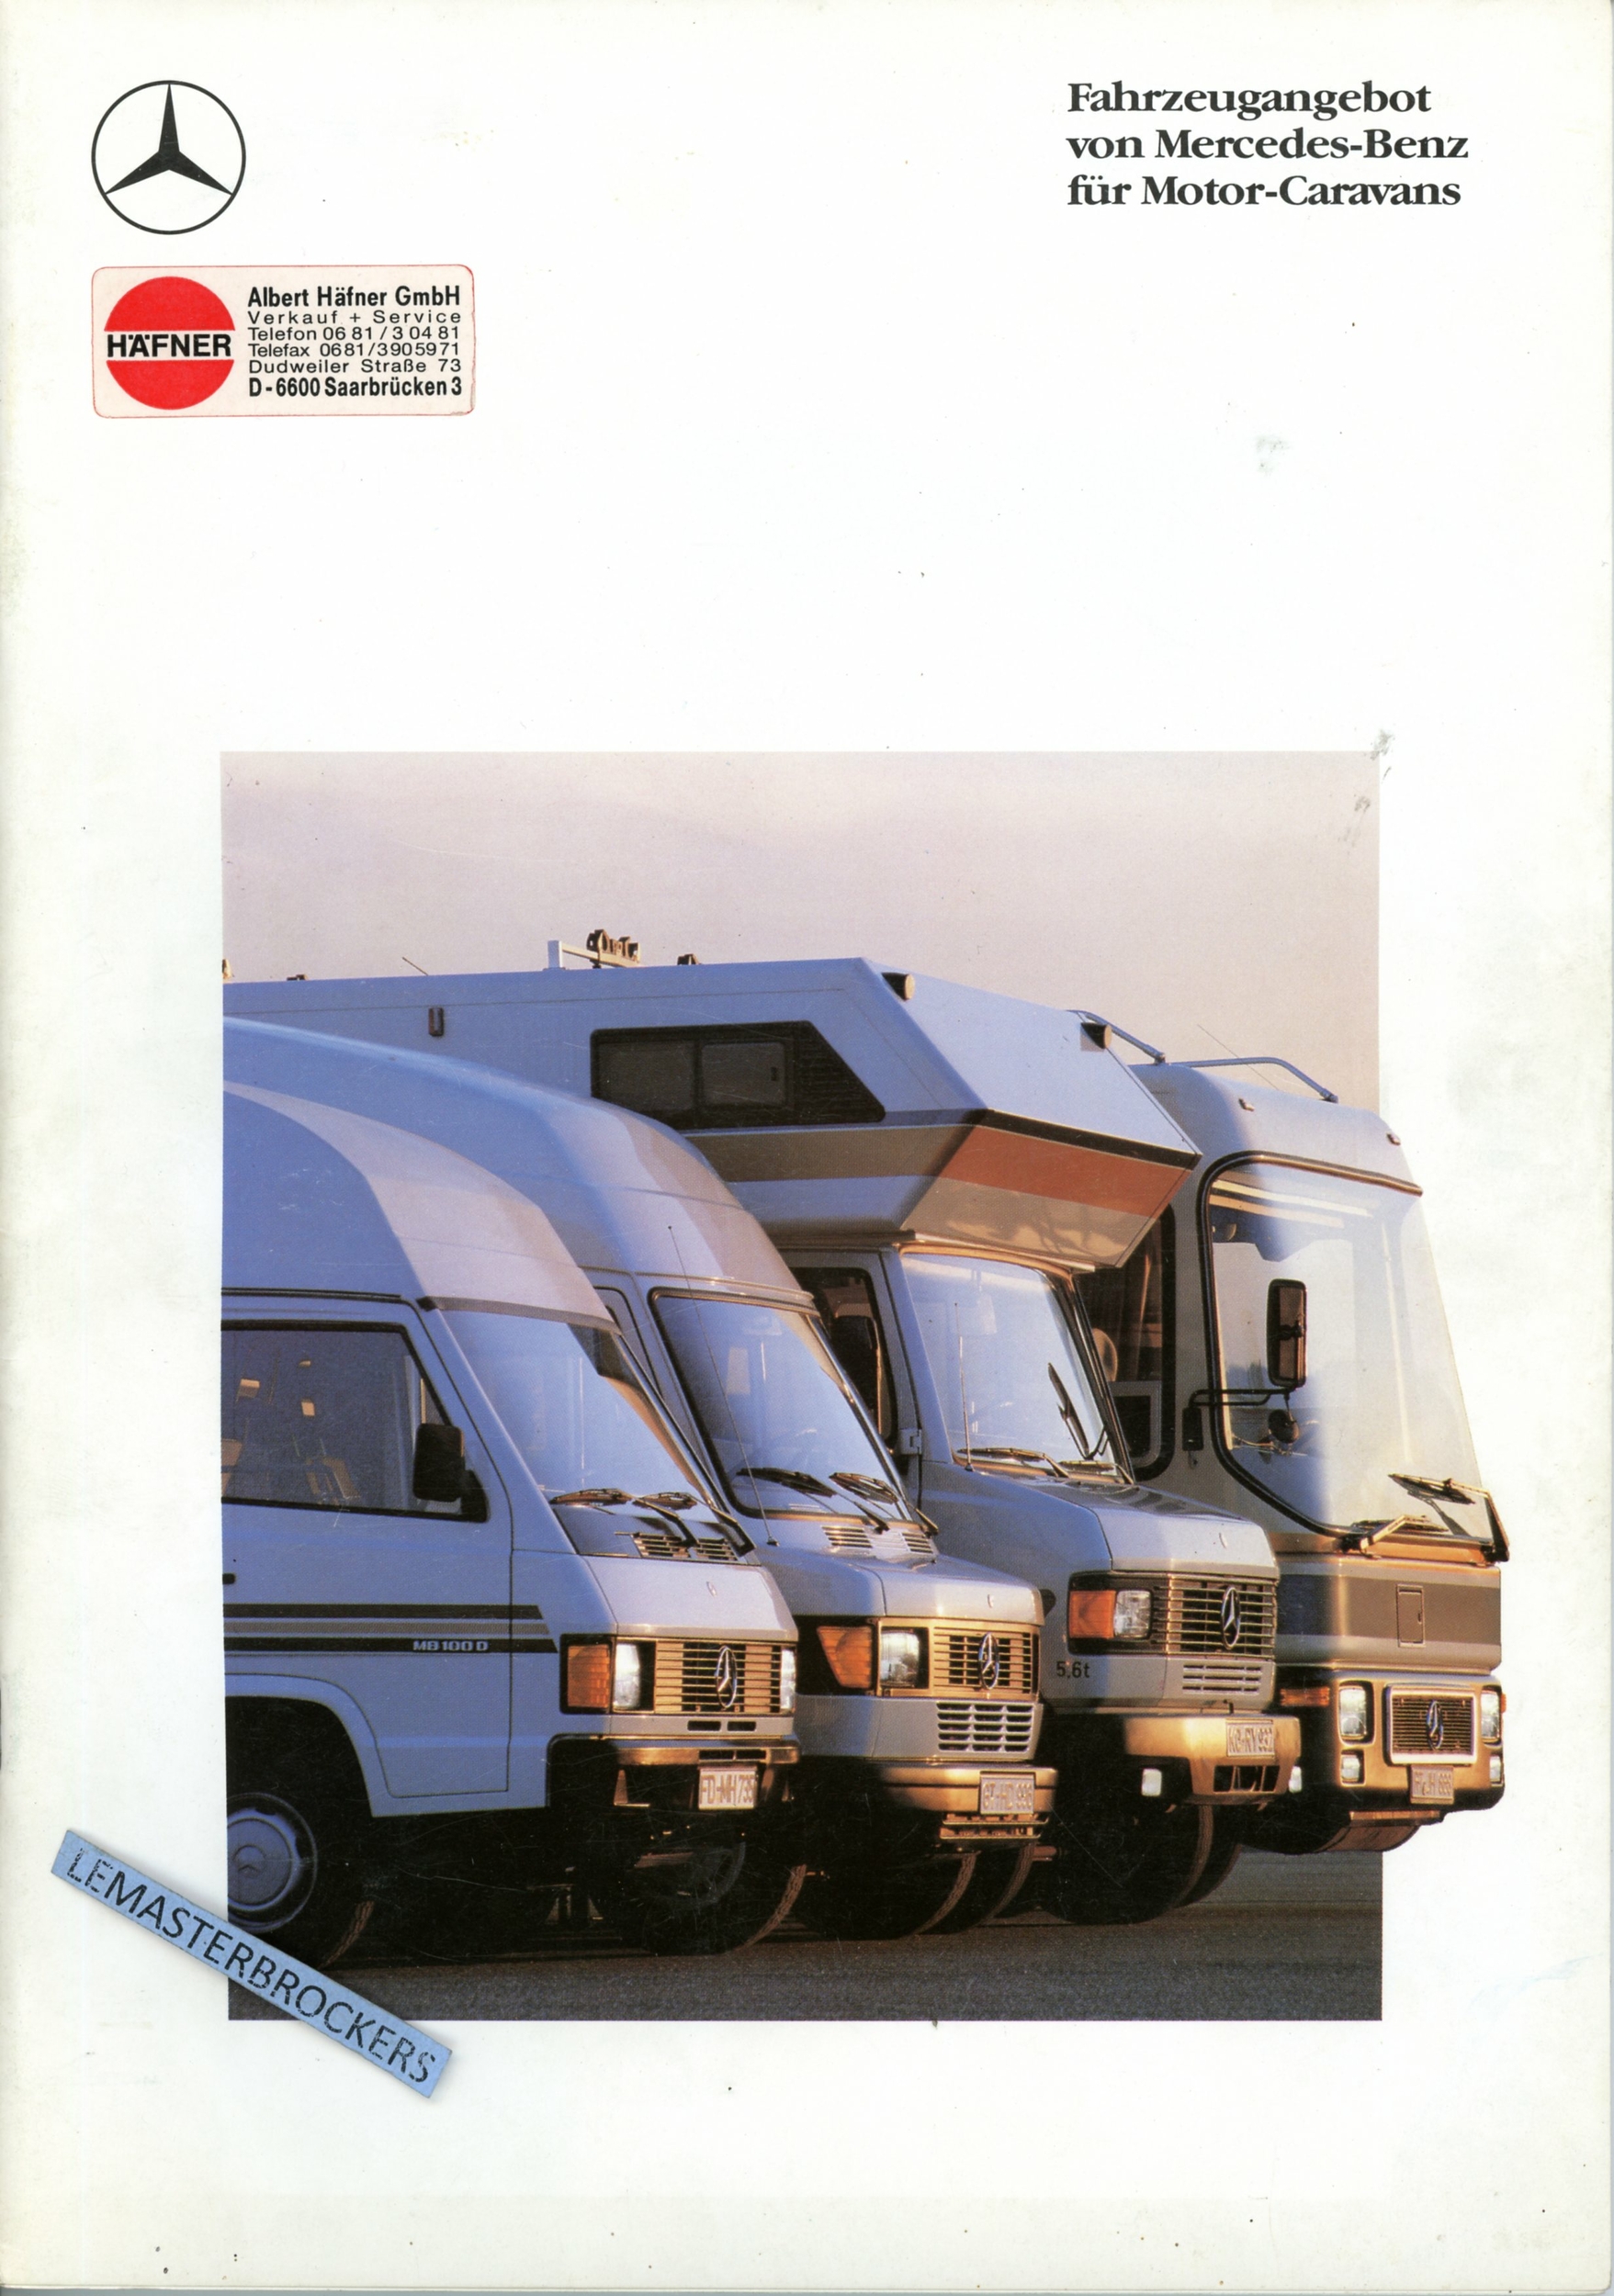 CATALOGUE-BROCHURE-MERCEDES-CAMPING-CAR-LEMASTERBROCKERS-1988